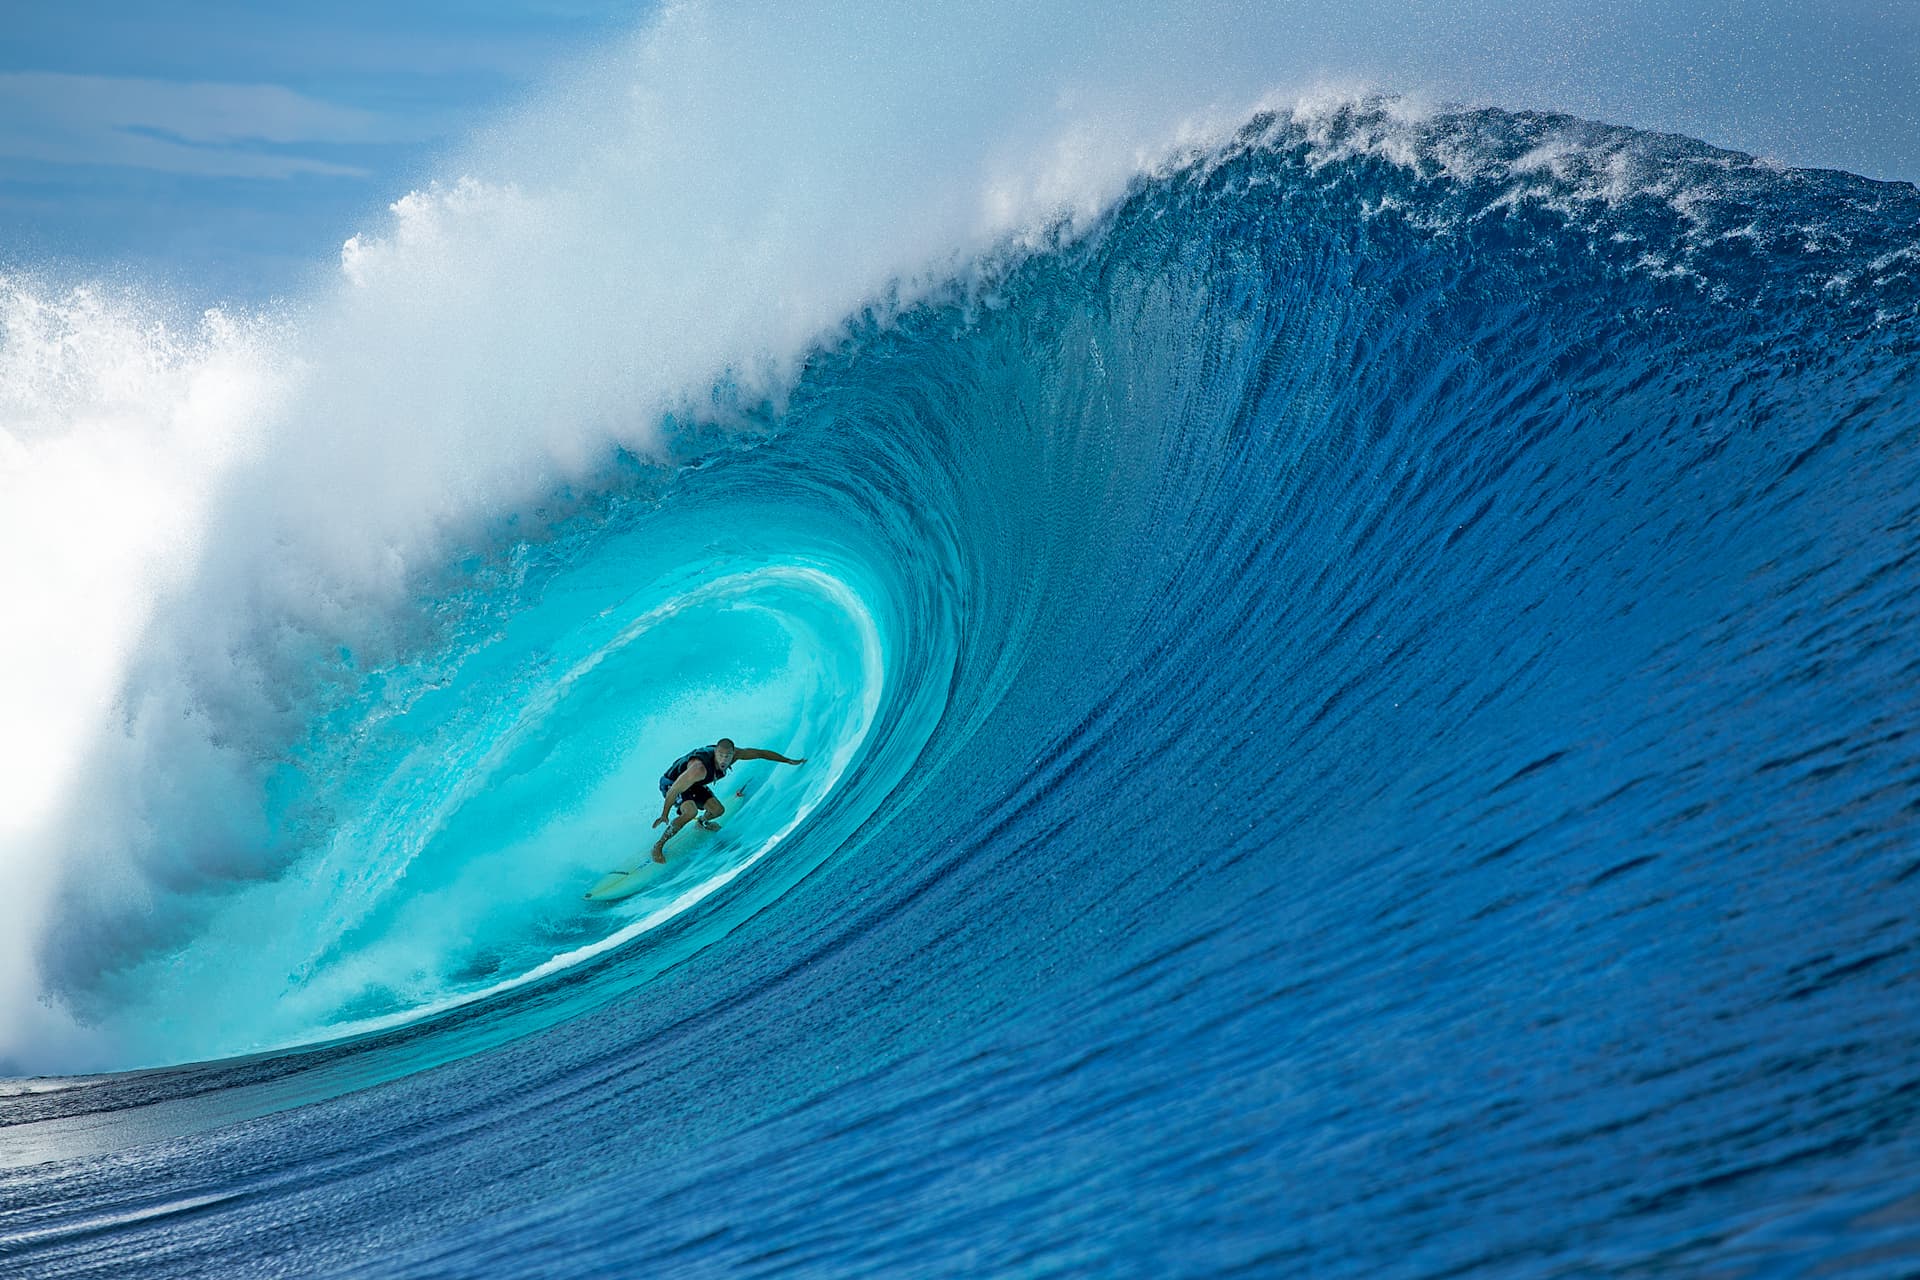 Fijian surfer Tevita Gukilau rides an enormous tube at Cloud. 